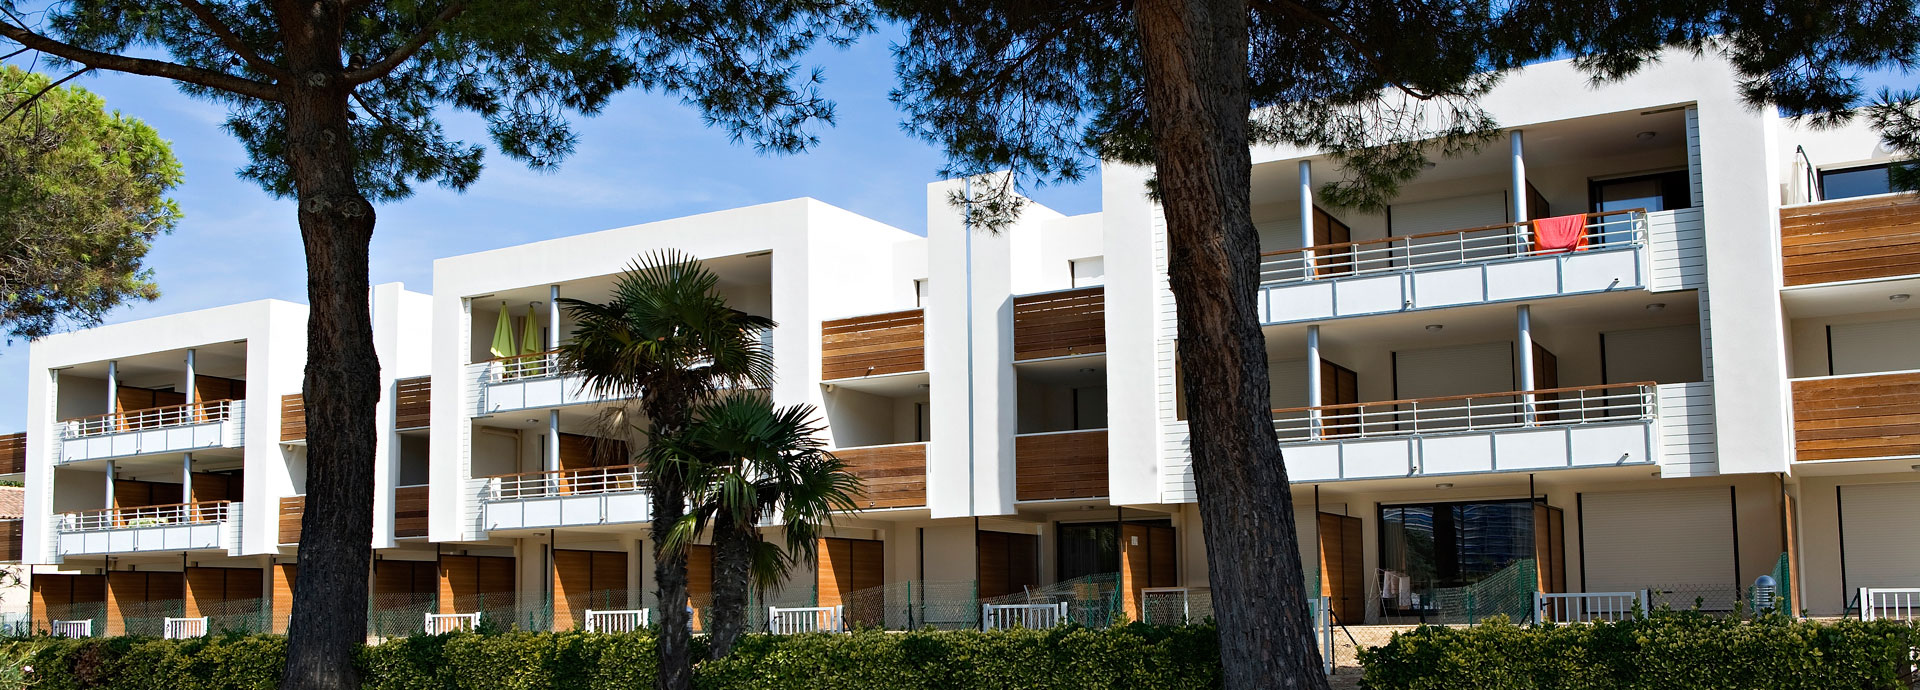 Affitto case vacanza a Cagnes-sur-Mer in Costa Azzurra: promozione residence Le Crystal